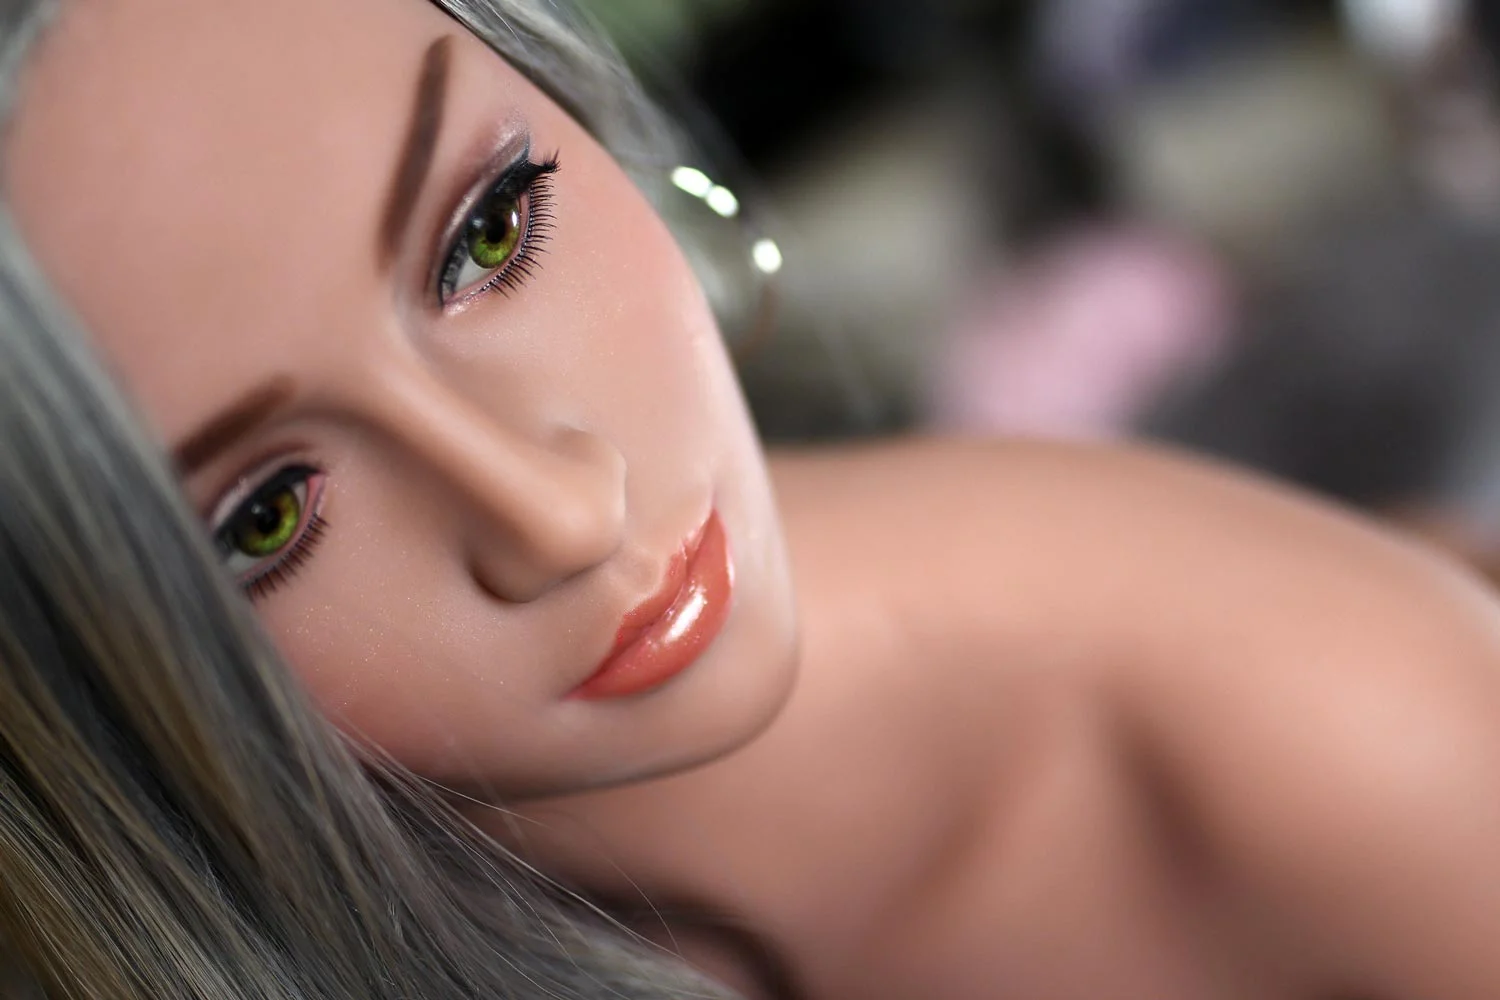 Green eyed sex doll